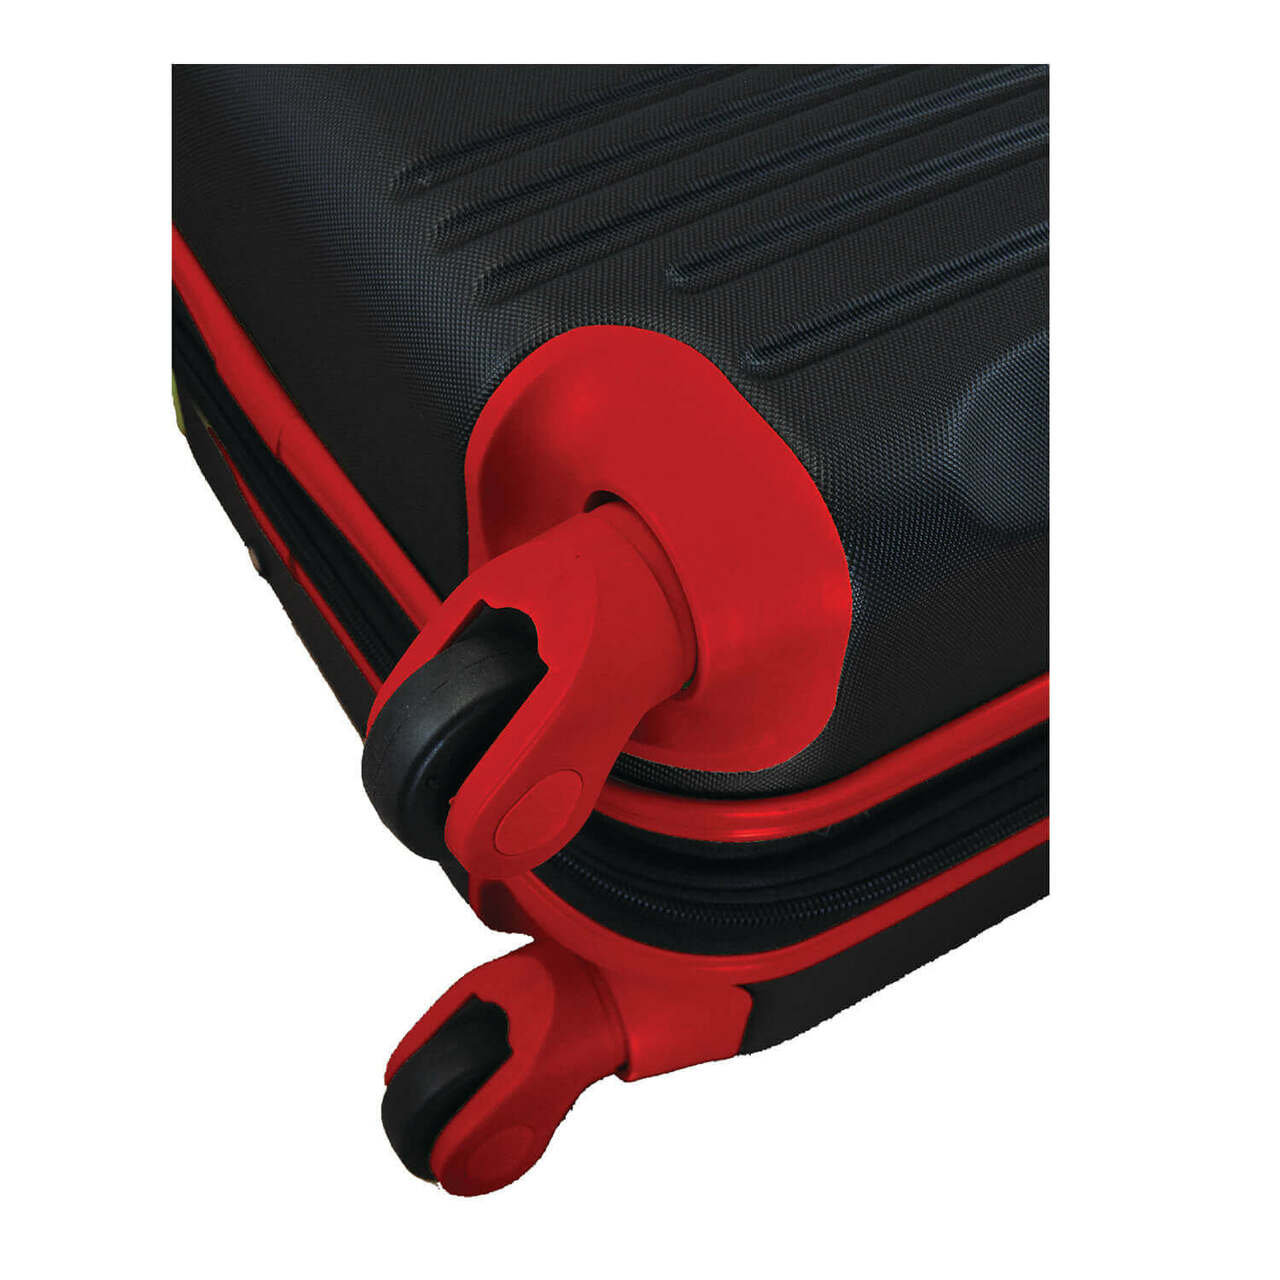 Arizona Carry On Spinner Luggage | Arizona Hardcase Two-Tone Luggage Carry-on Spinner in Red